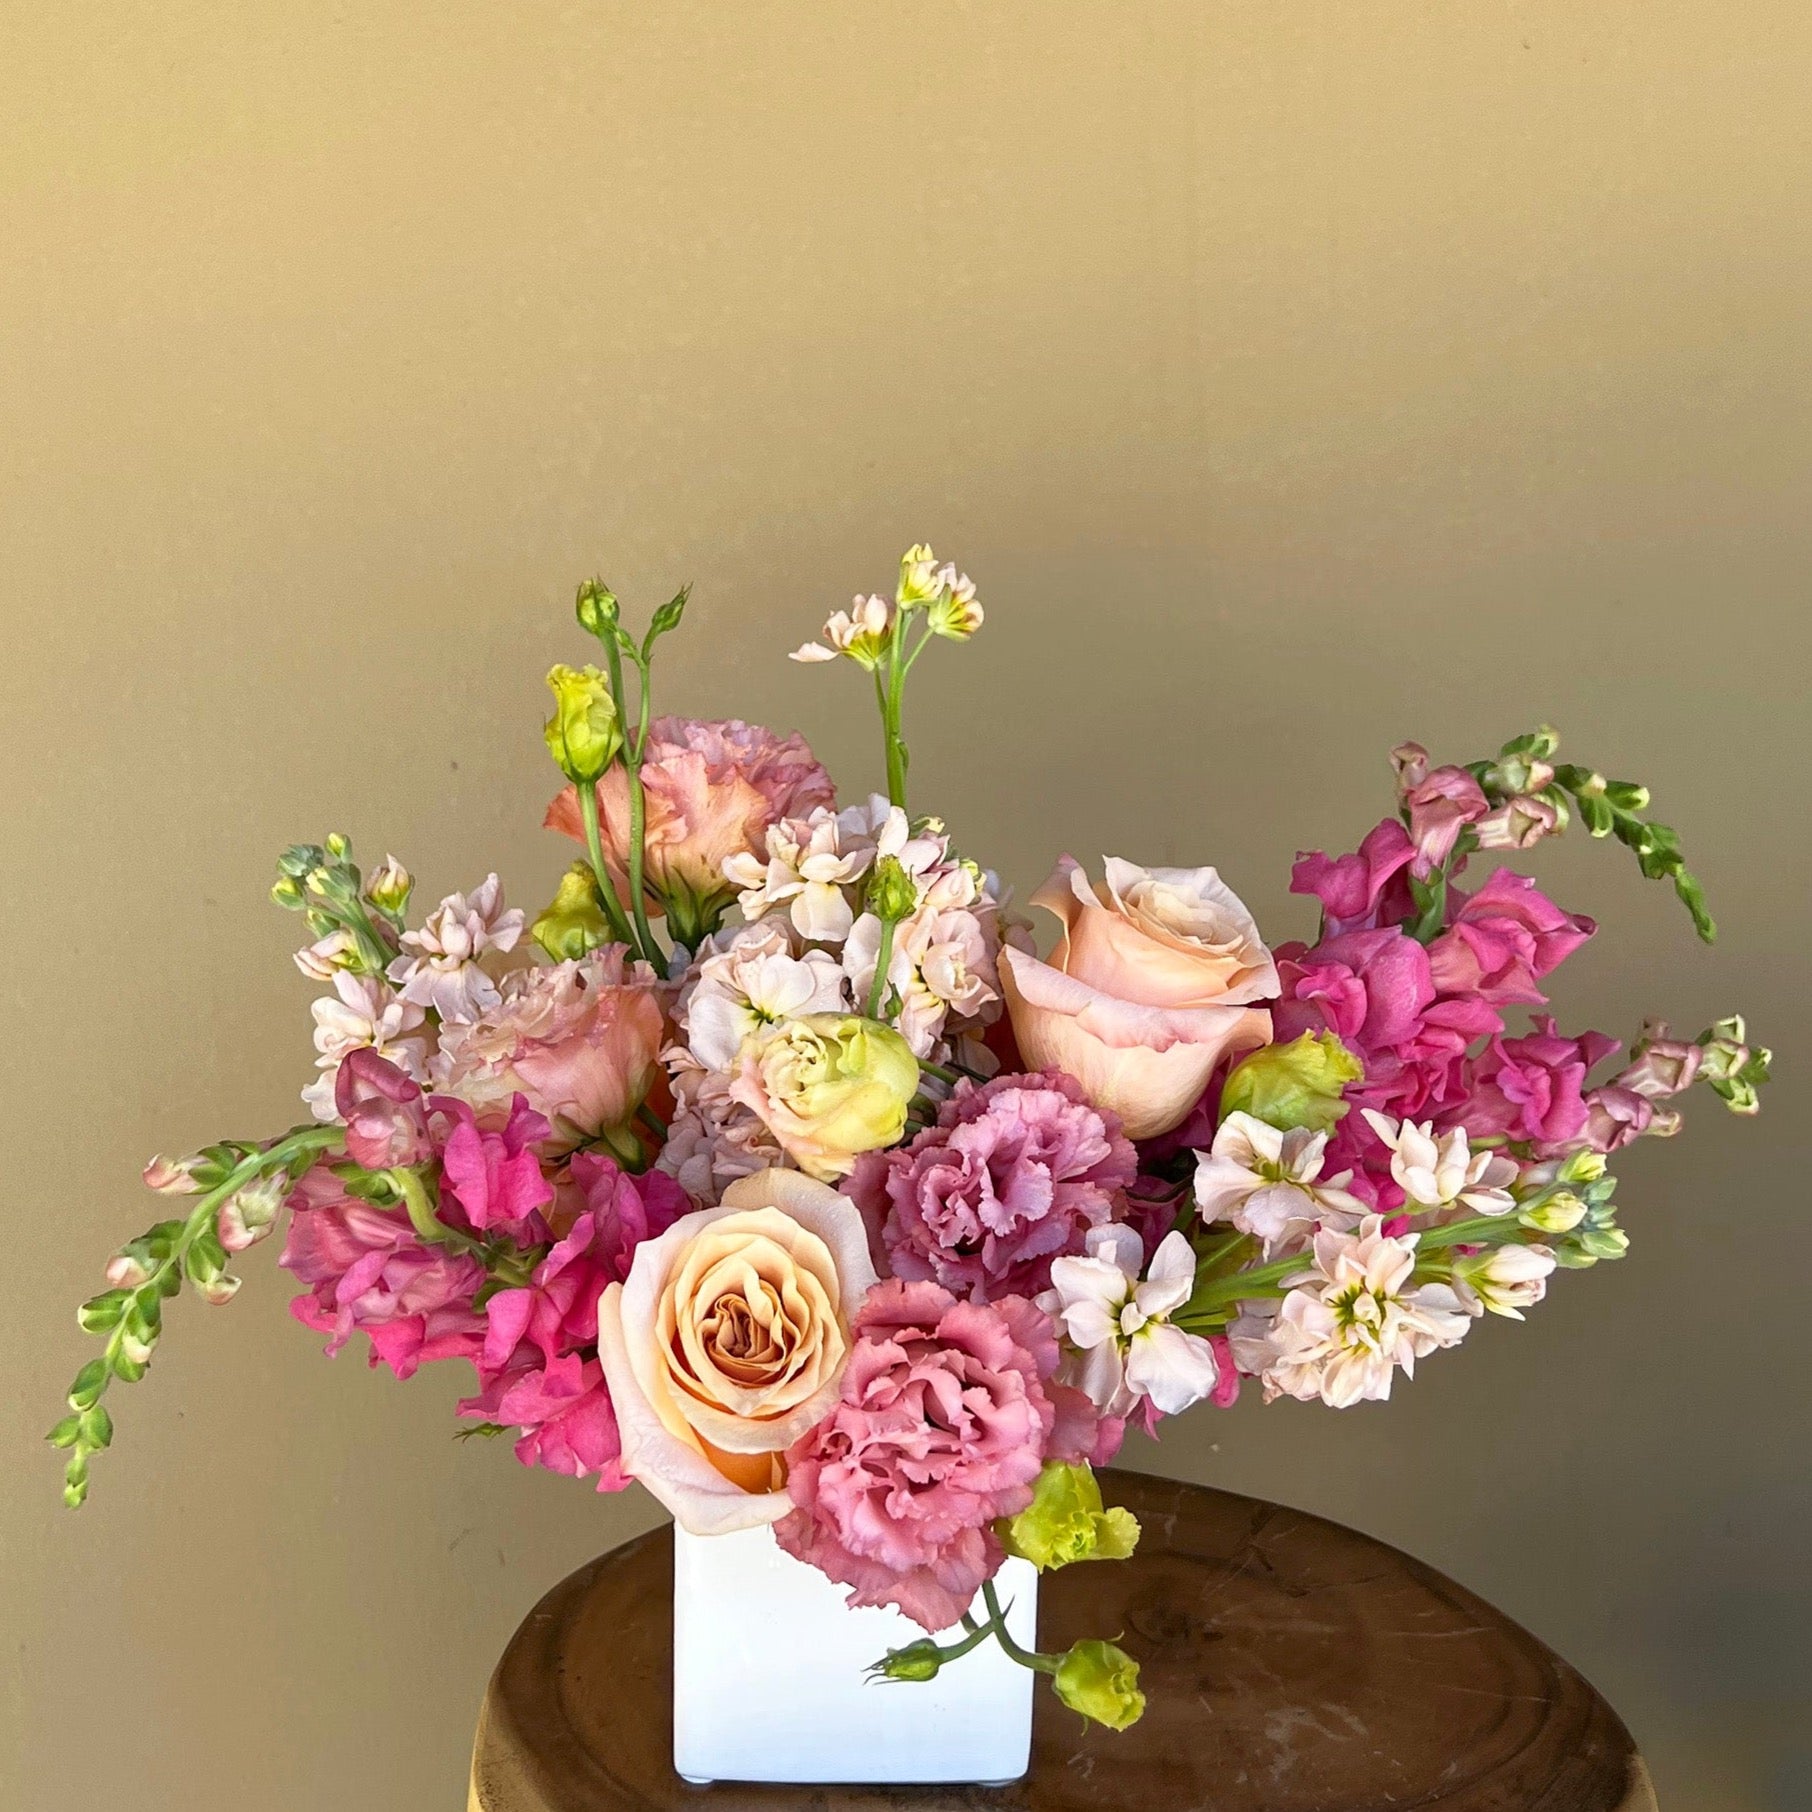 Westlake Village Top Florist | Flower Delivery | Wedding Flowers – The ...